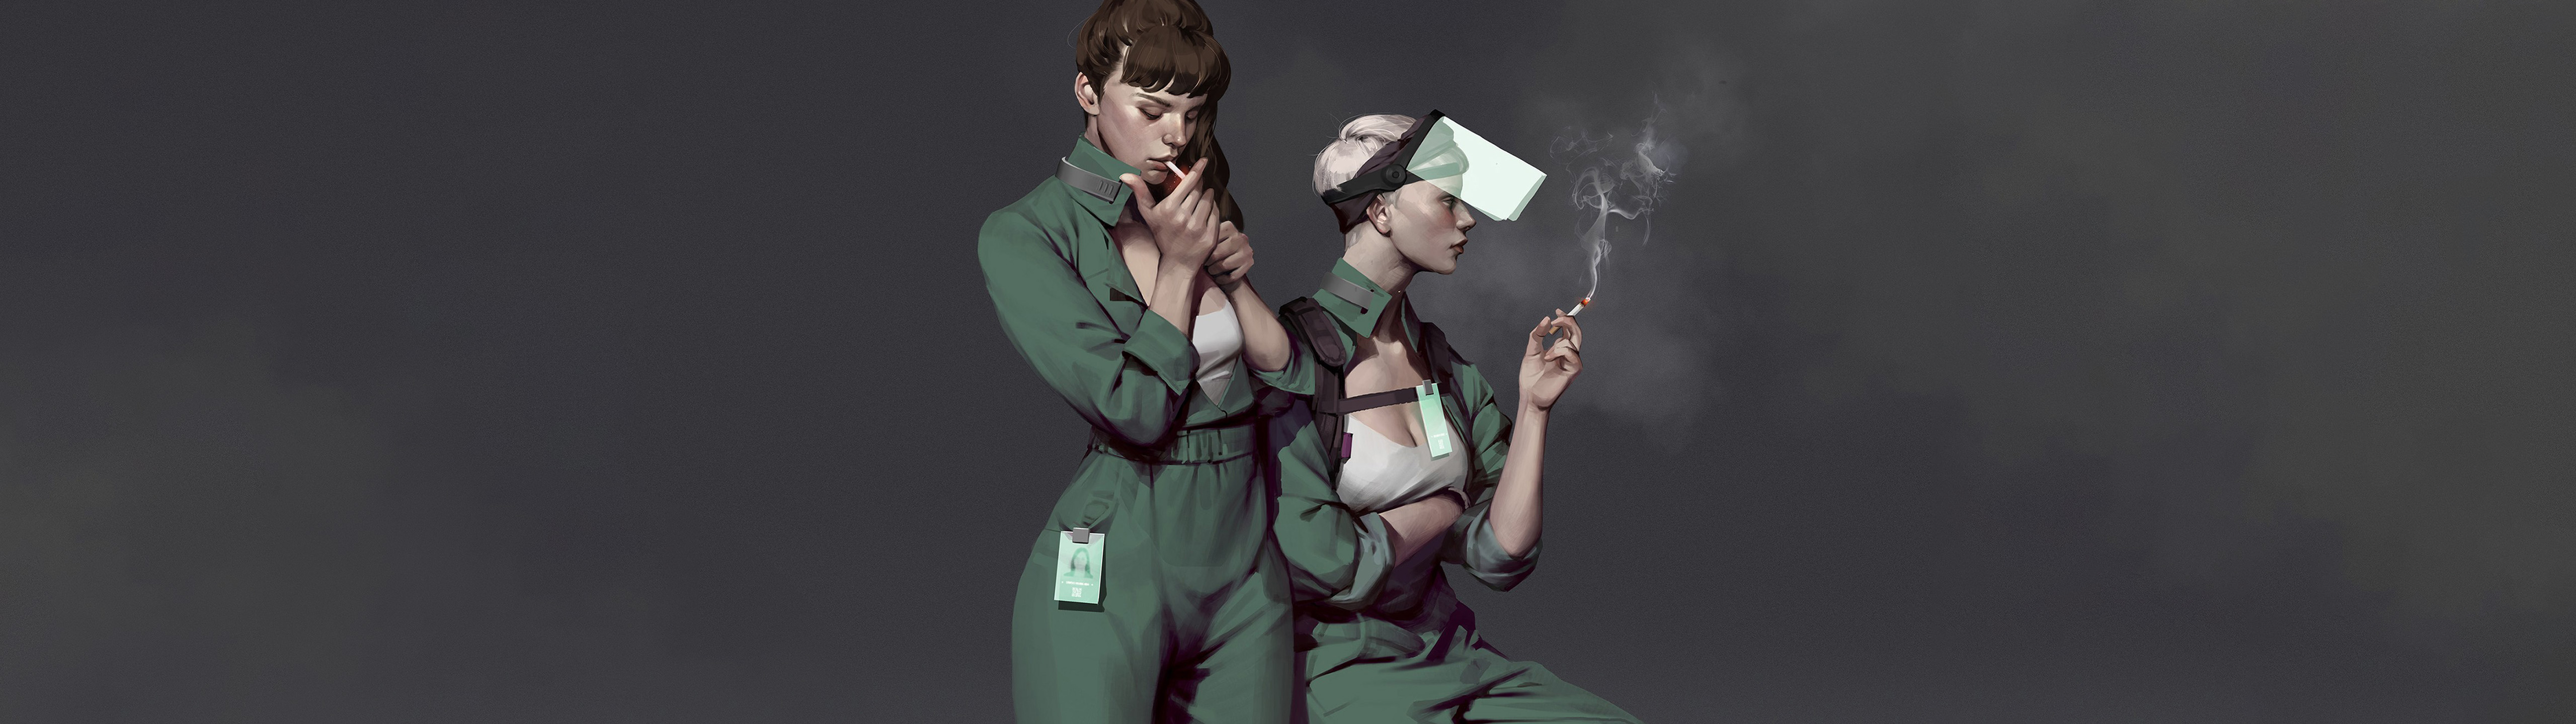 Siwoo Kim, women, Break, ultrawide, digital art, smoking, time, Quarantinex1440 Wallpaper